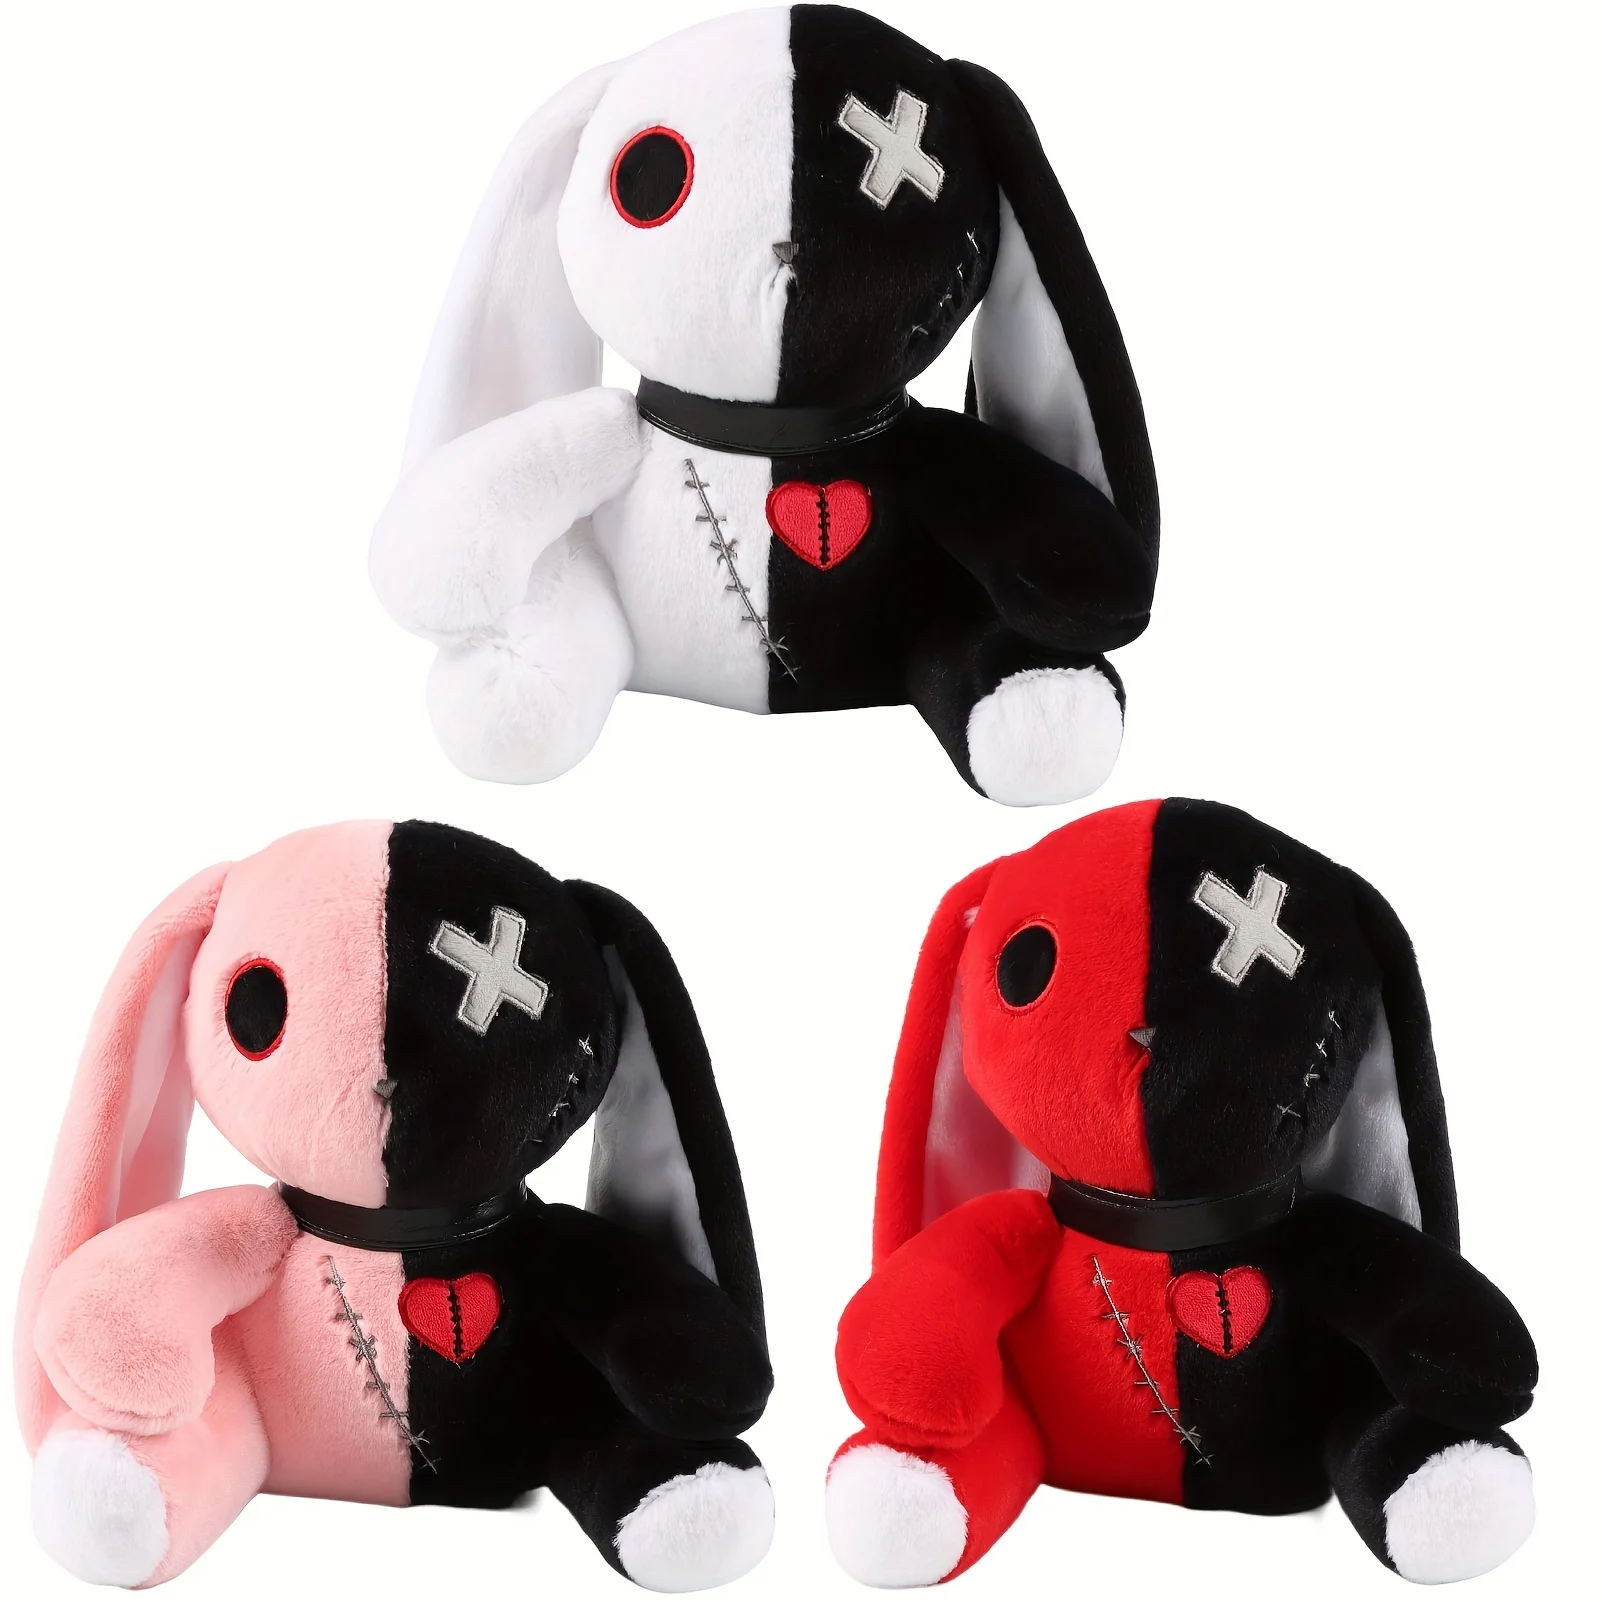 N creepy gothic bunny plush spooky bunny stuffed animal cute horror dreadful bunny doll thumb200